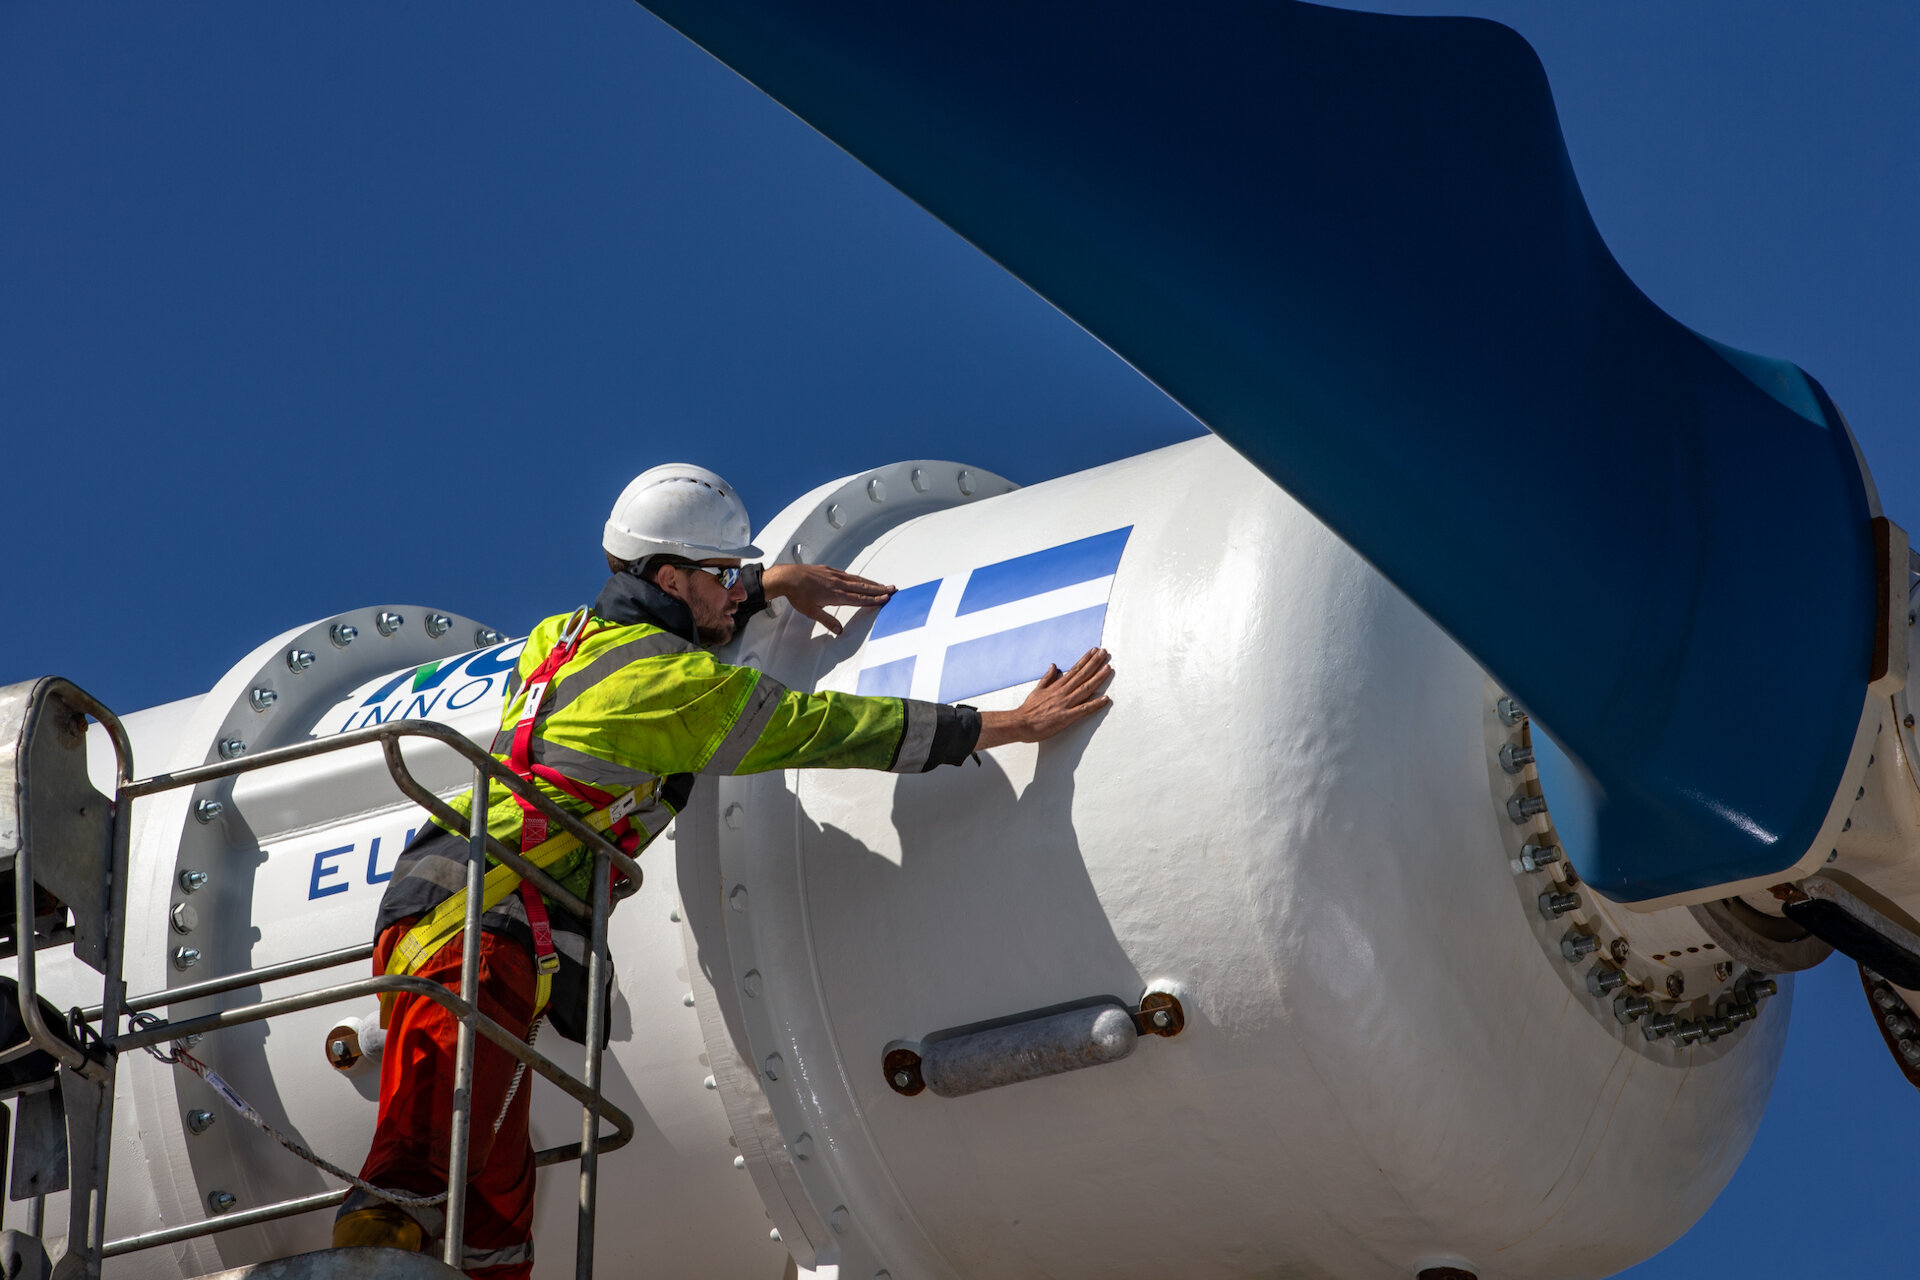 Adding the Shetland flag to the turbine